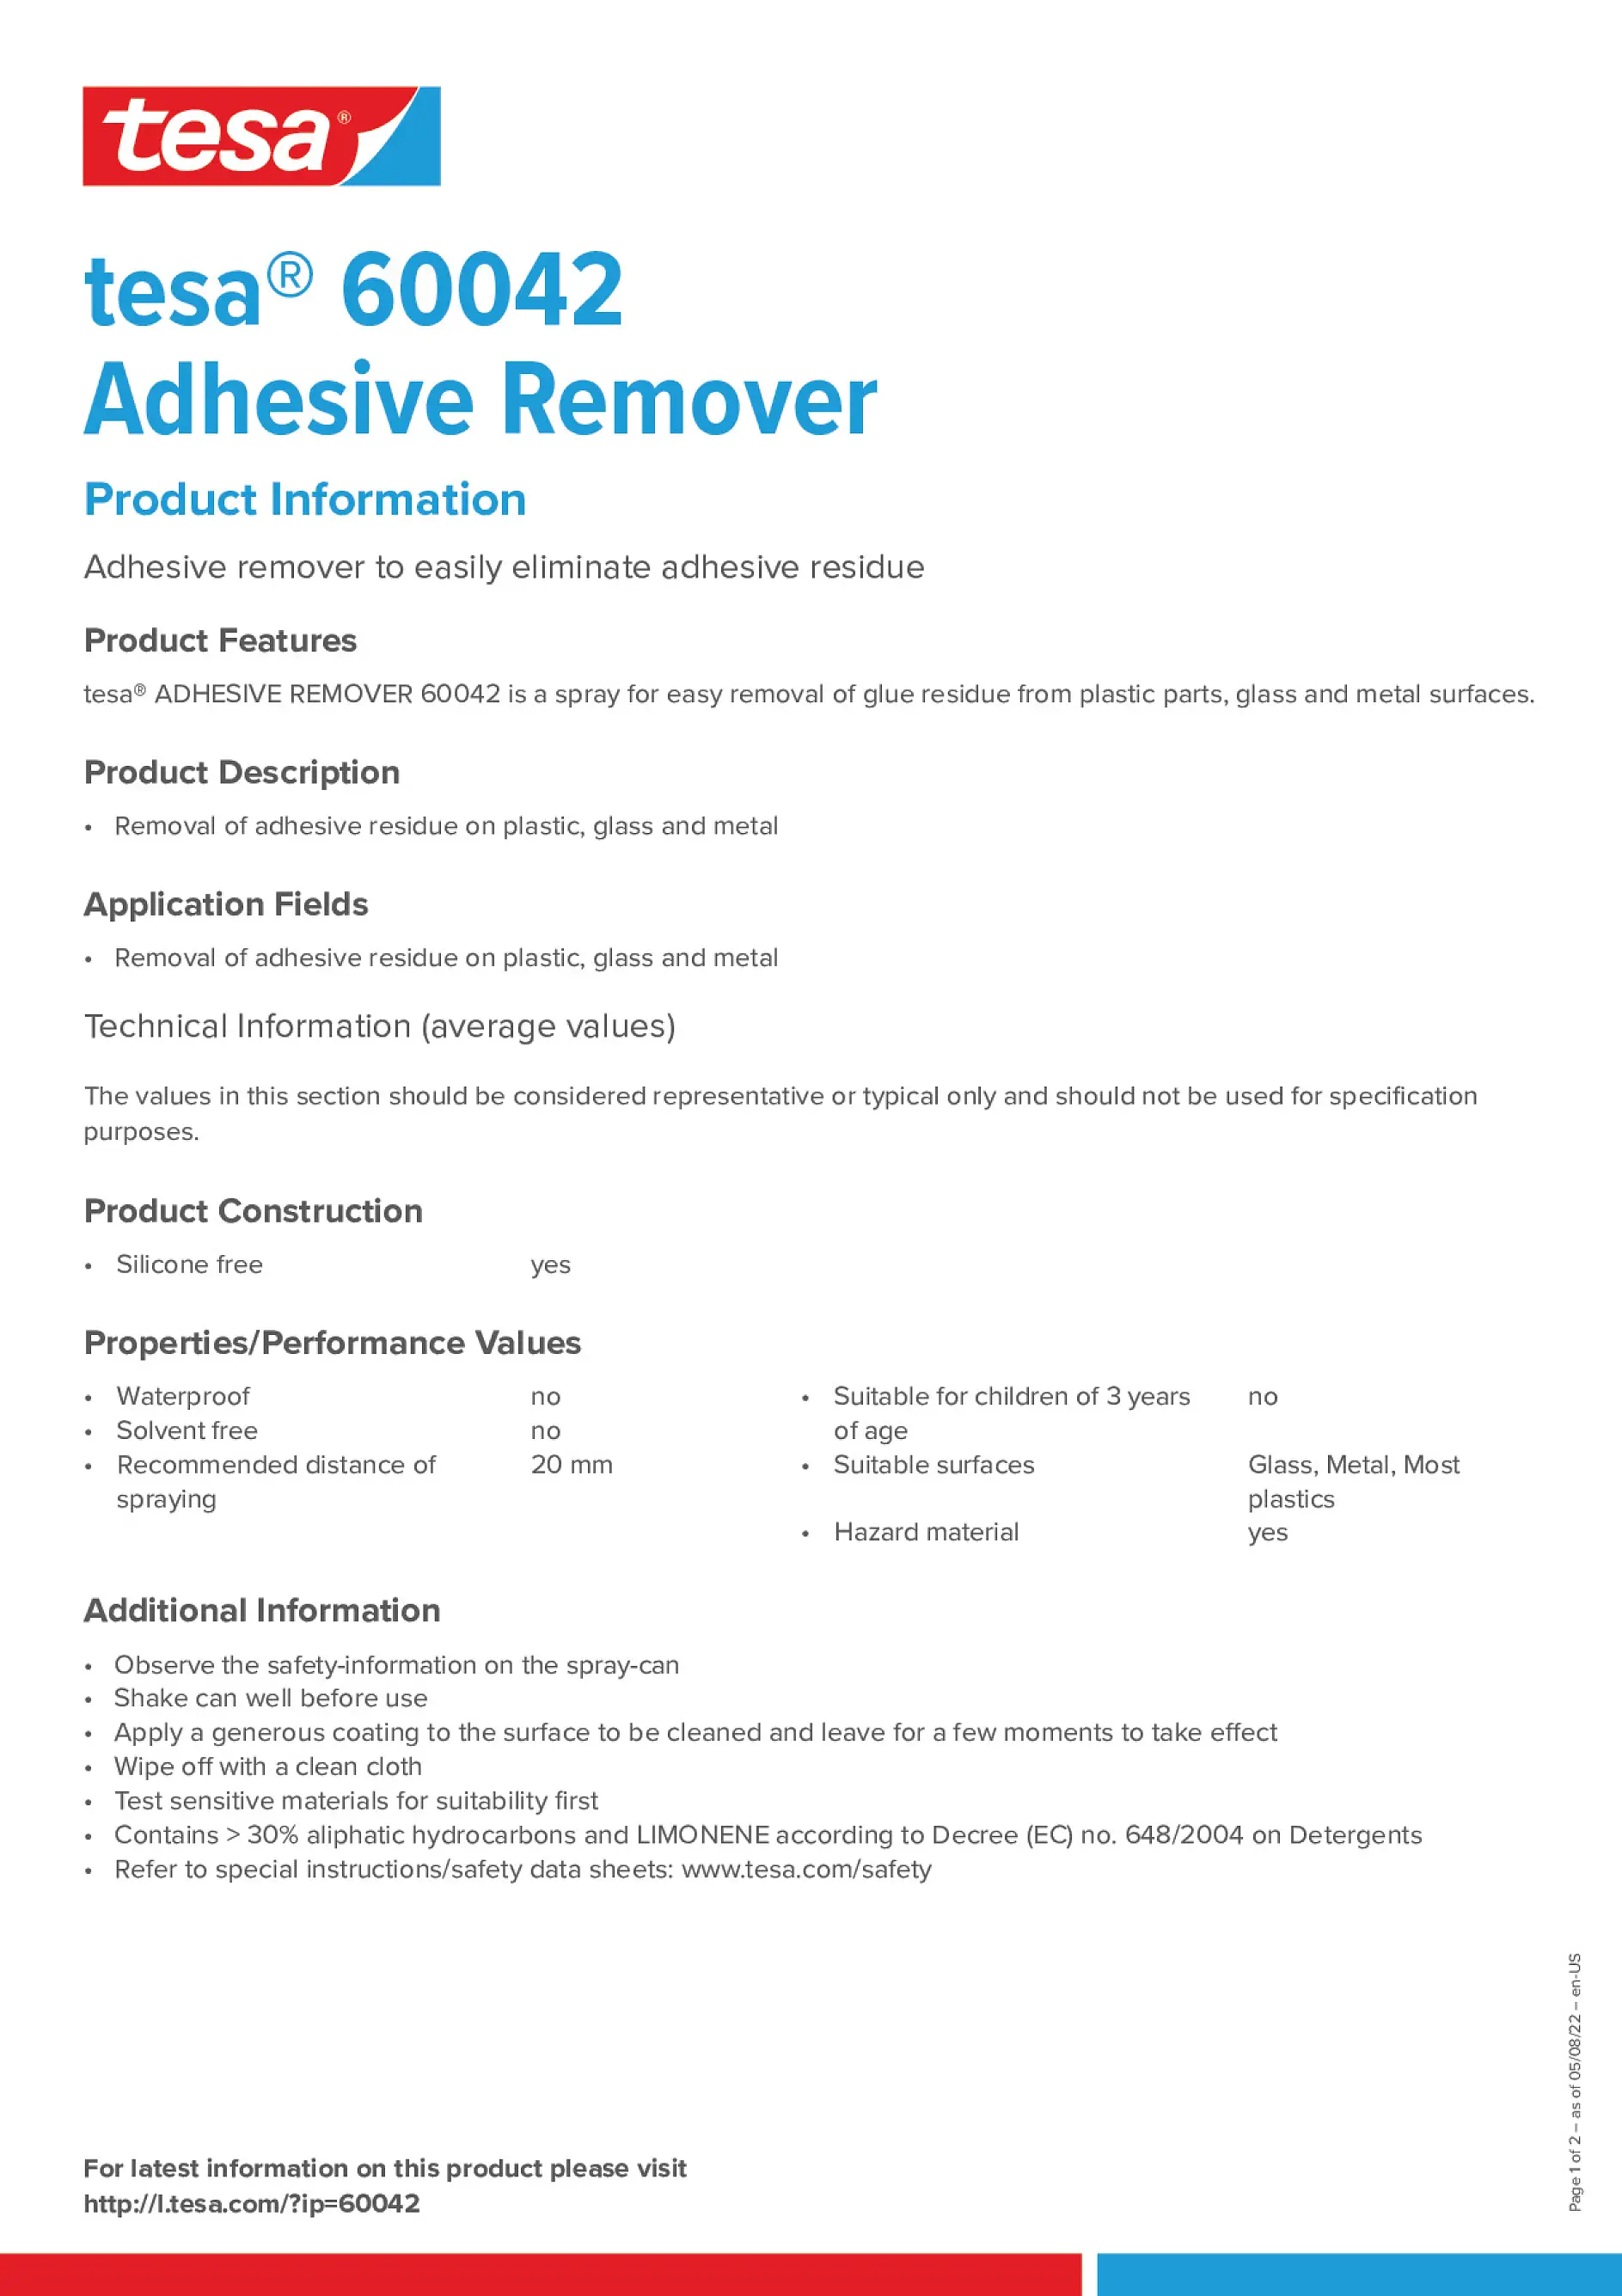 tesa_60042_Adhesive_Remover_en-US